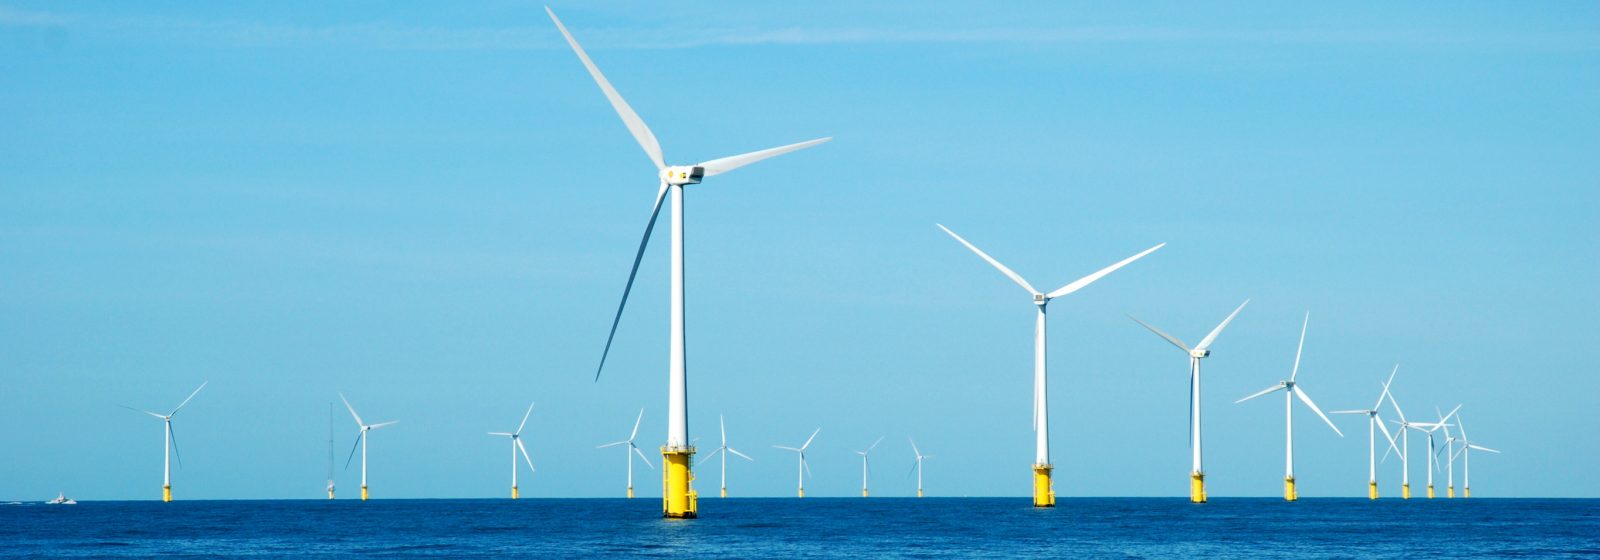 20220729 offshore windpark